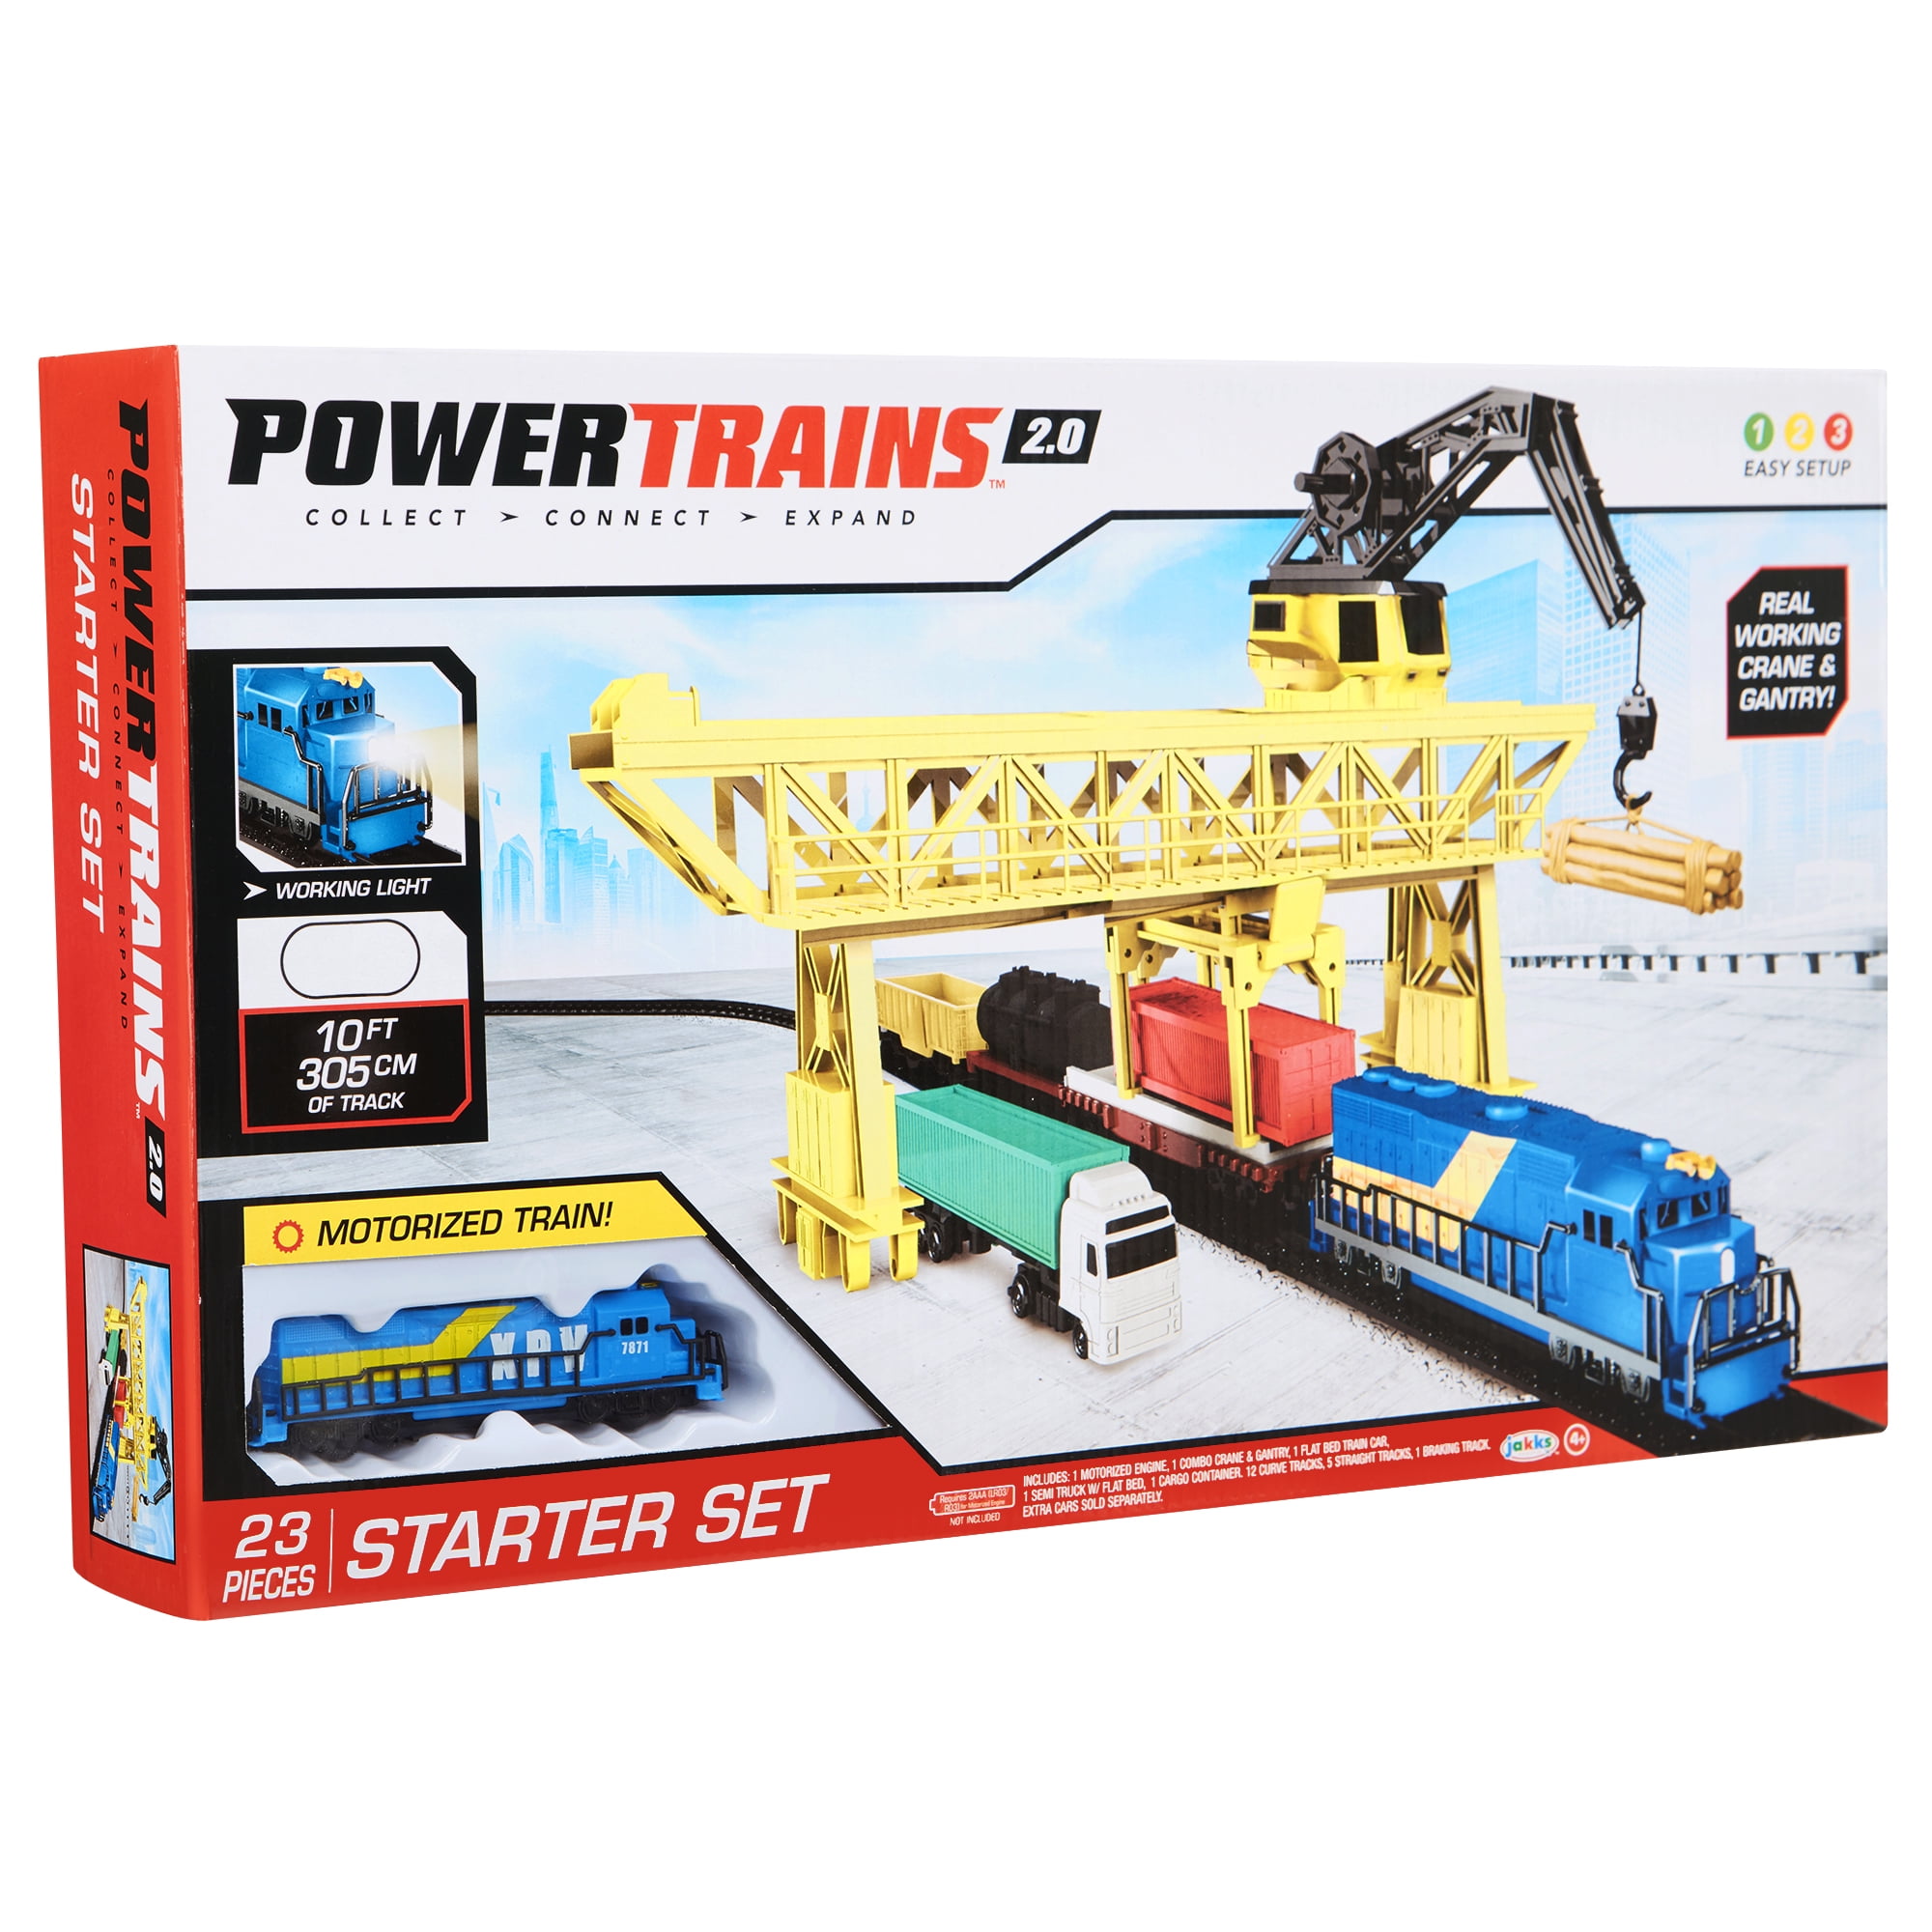 Power Trains 2.0 STARTER SET Port Cargo Loader Crane & Gantry Motorized Train